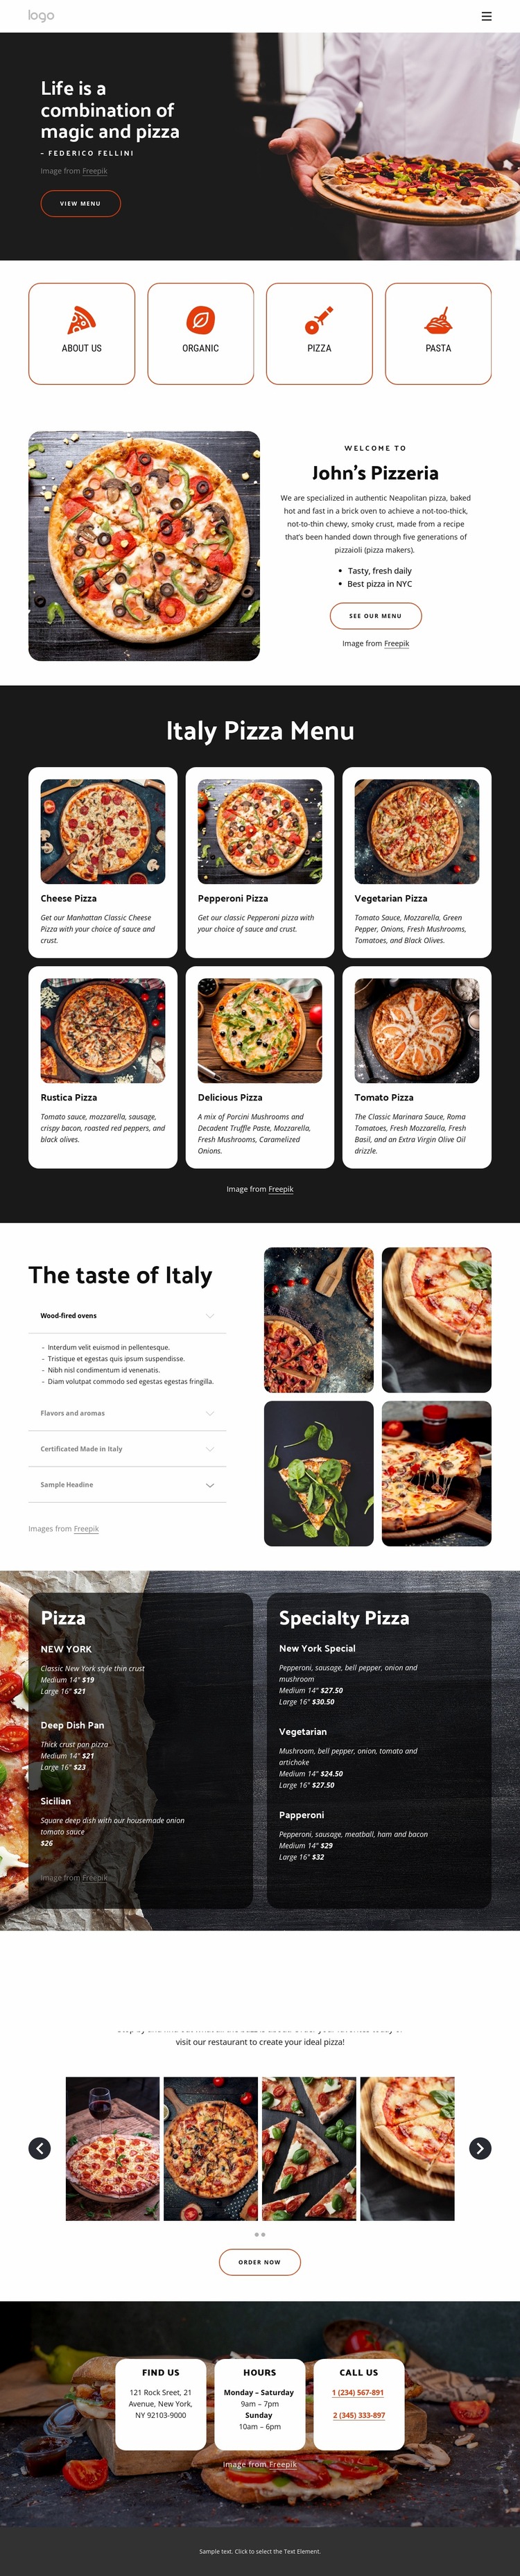 Family-friendly pizza restaurant Website Mockup